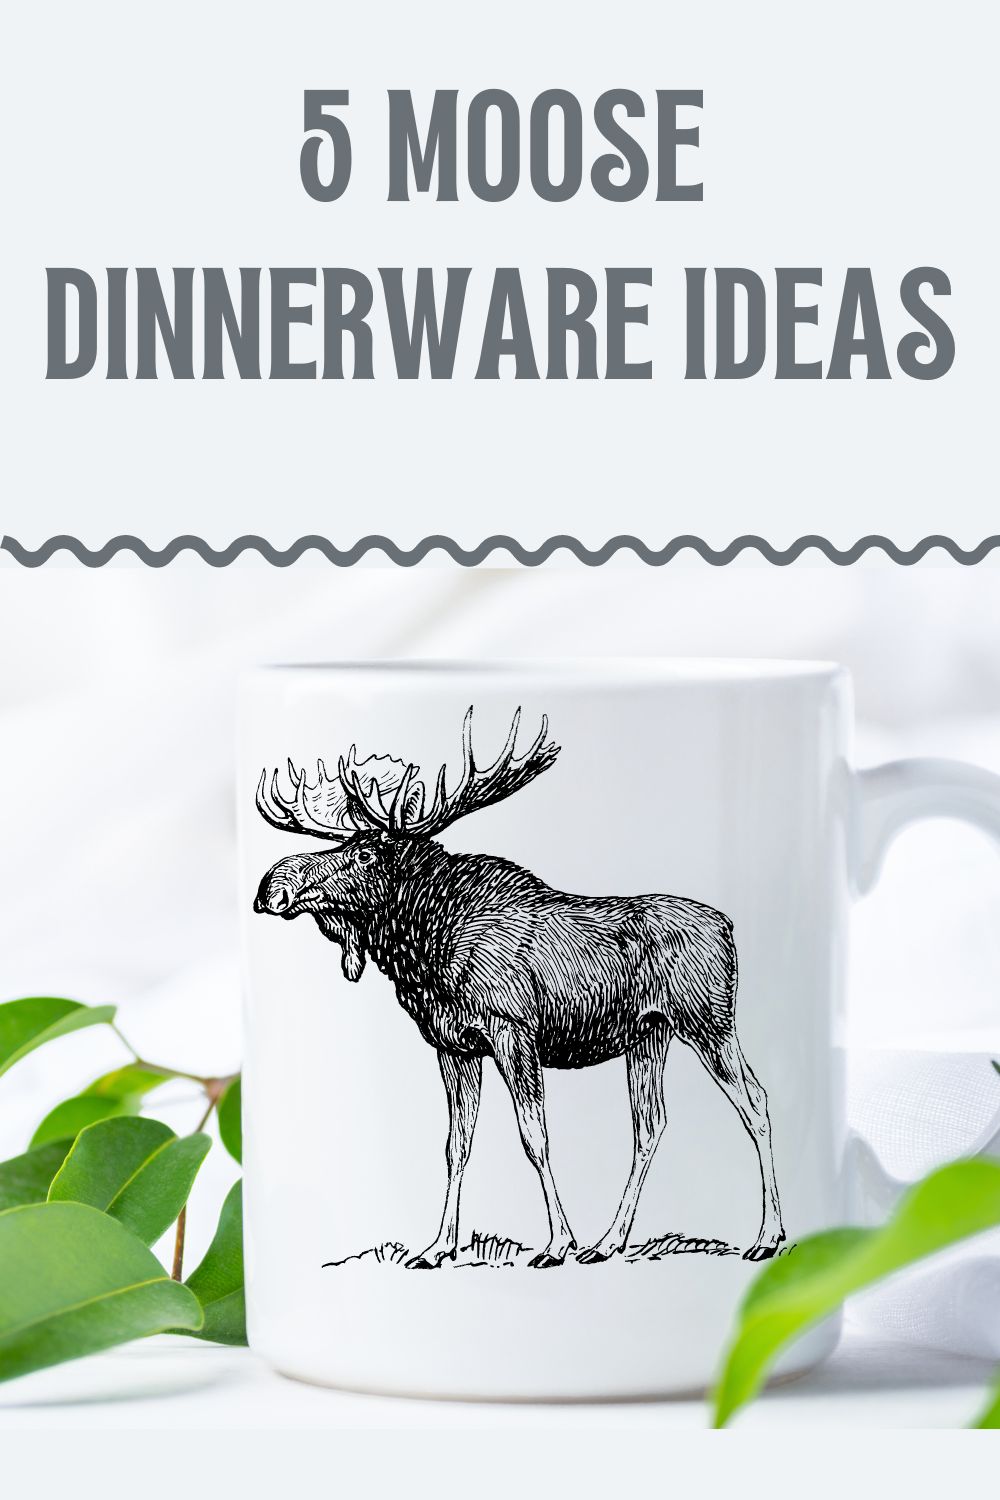 5 moose dinnerware ideas.